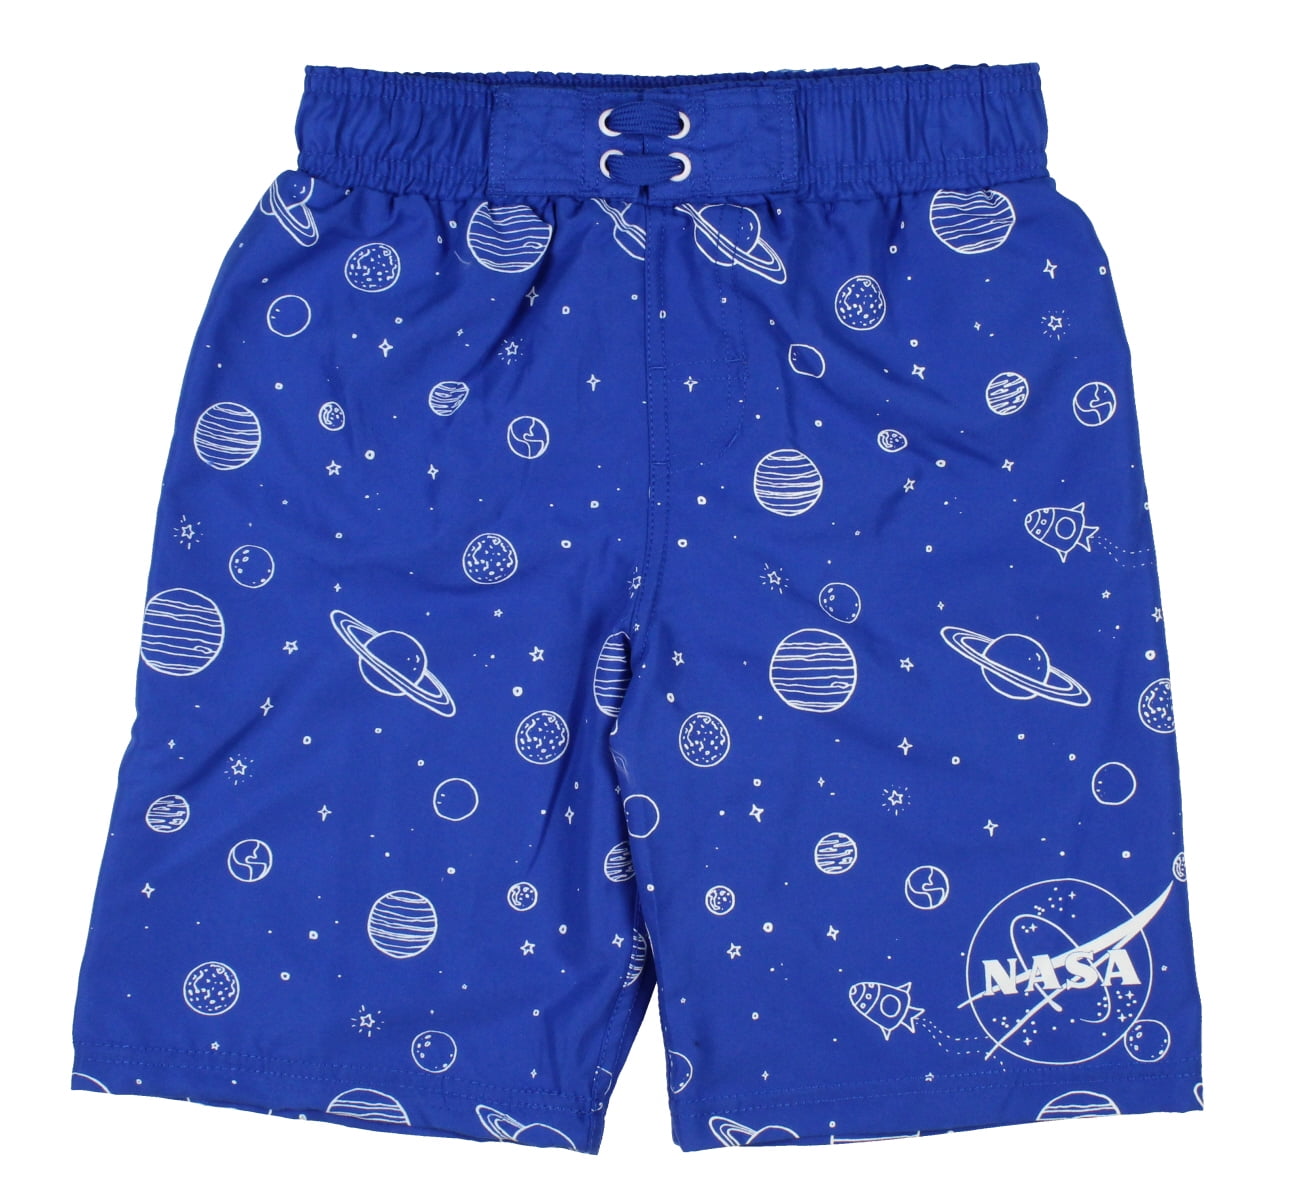 CAWHJDW Solar System Planets and Stars Boys Swimwear Drawstring Board Shorts